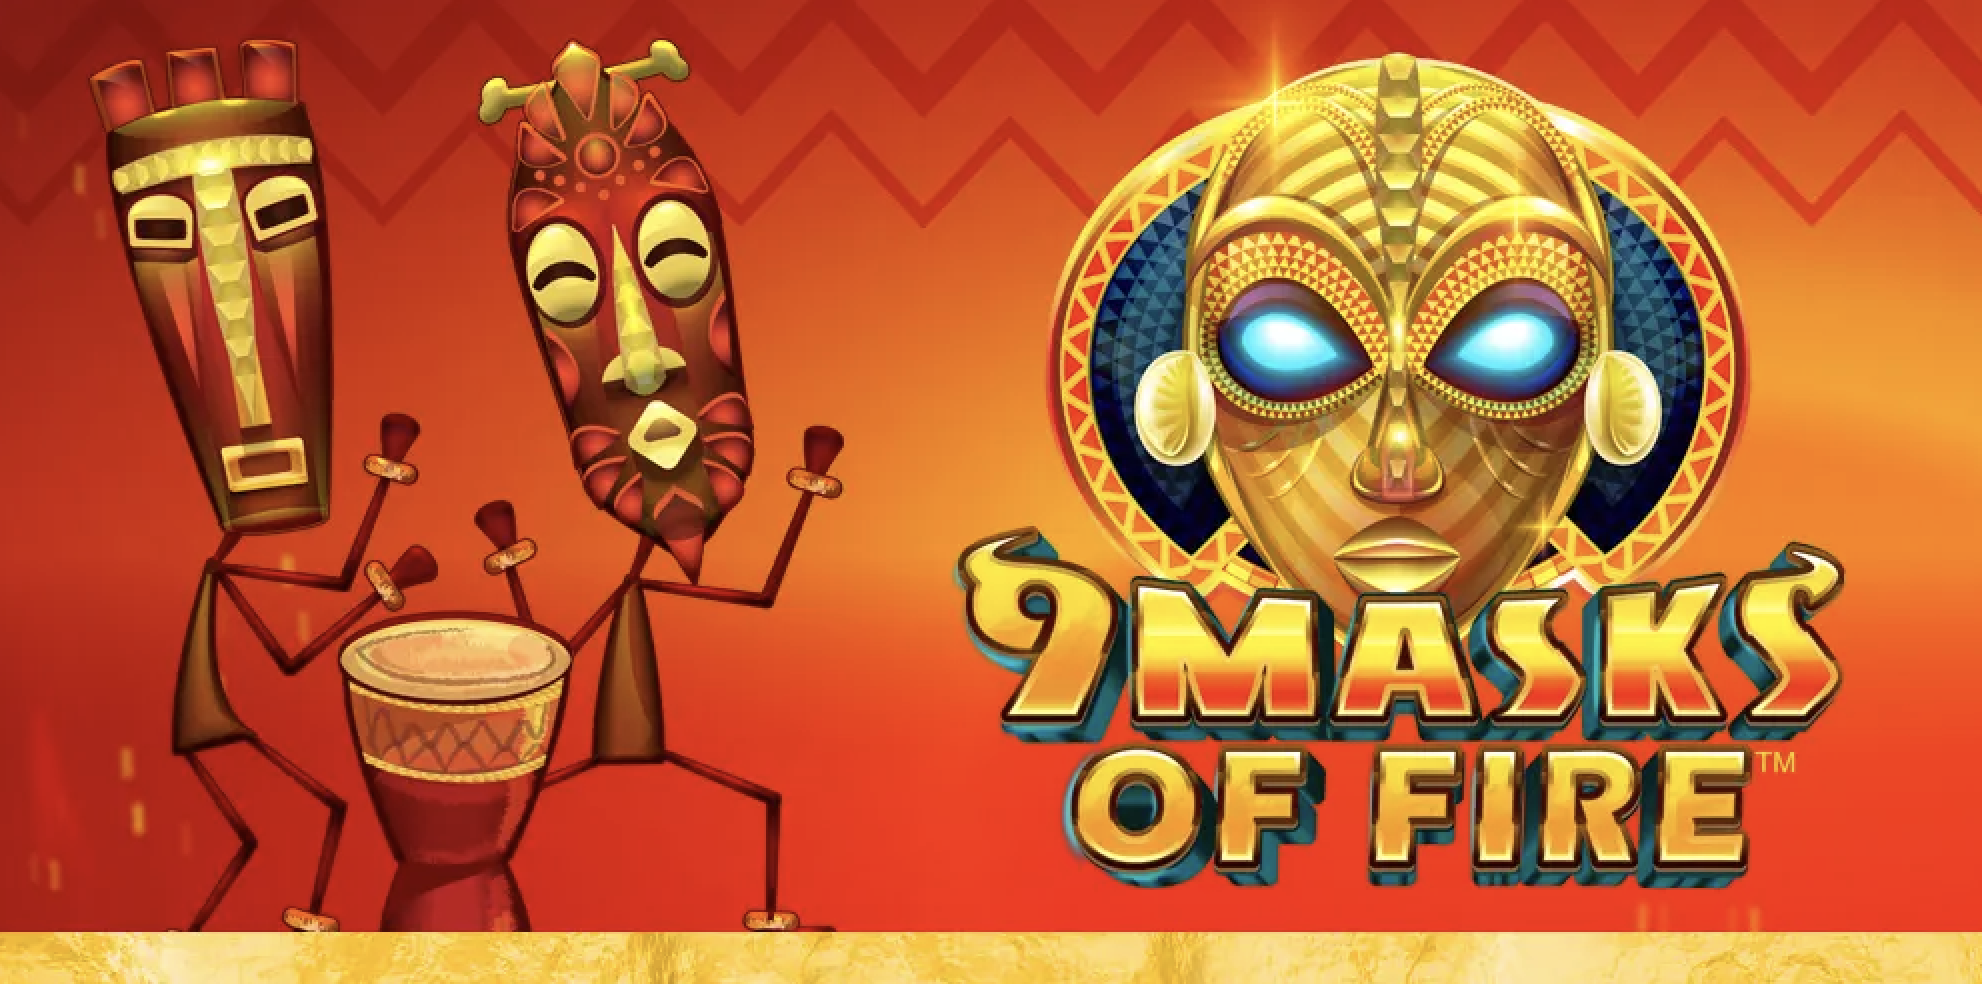 9 Masks of Fire Slot Machine?